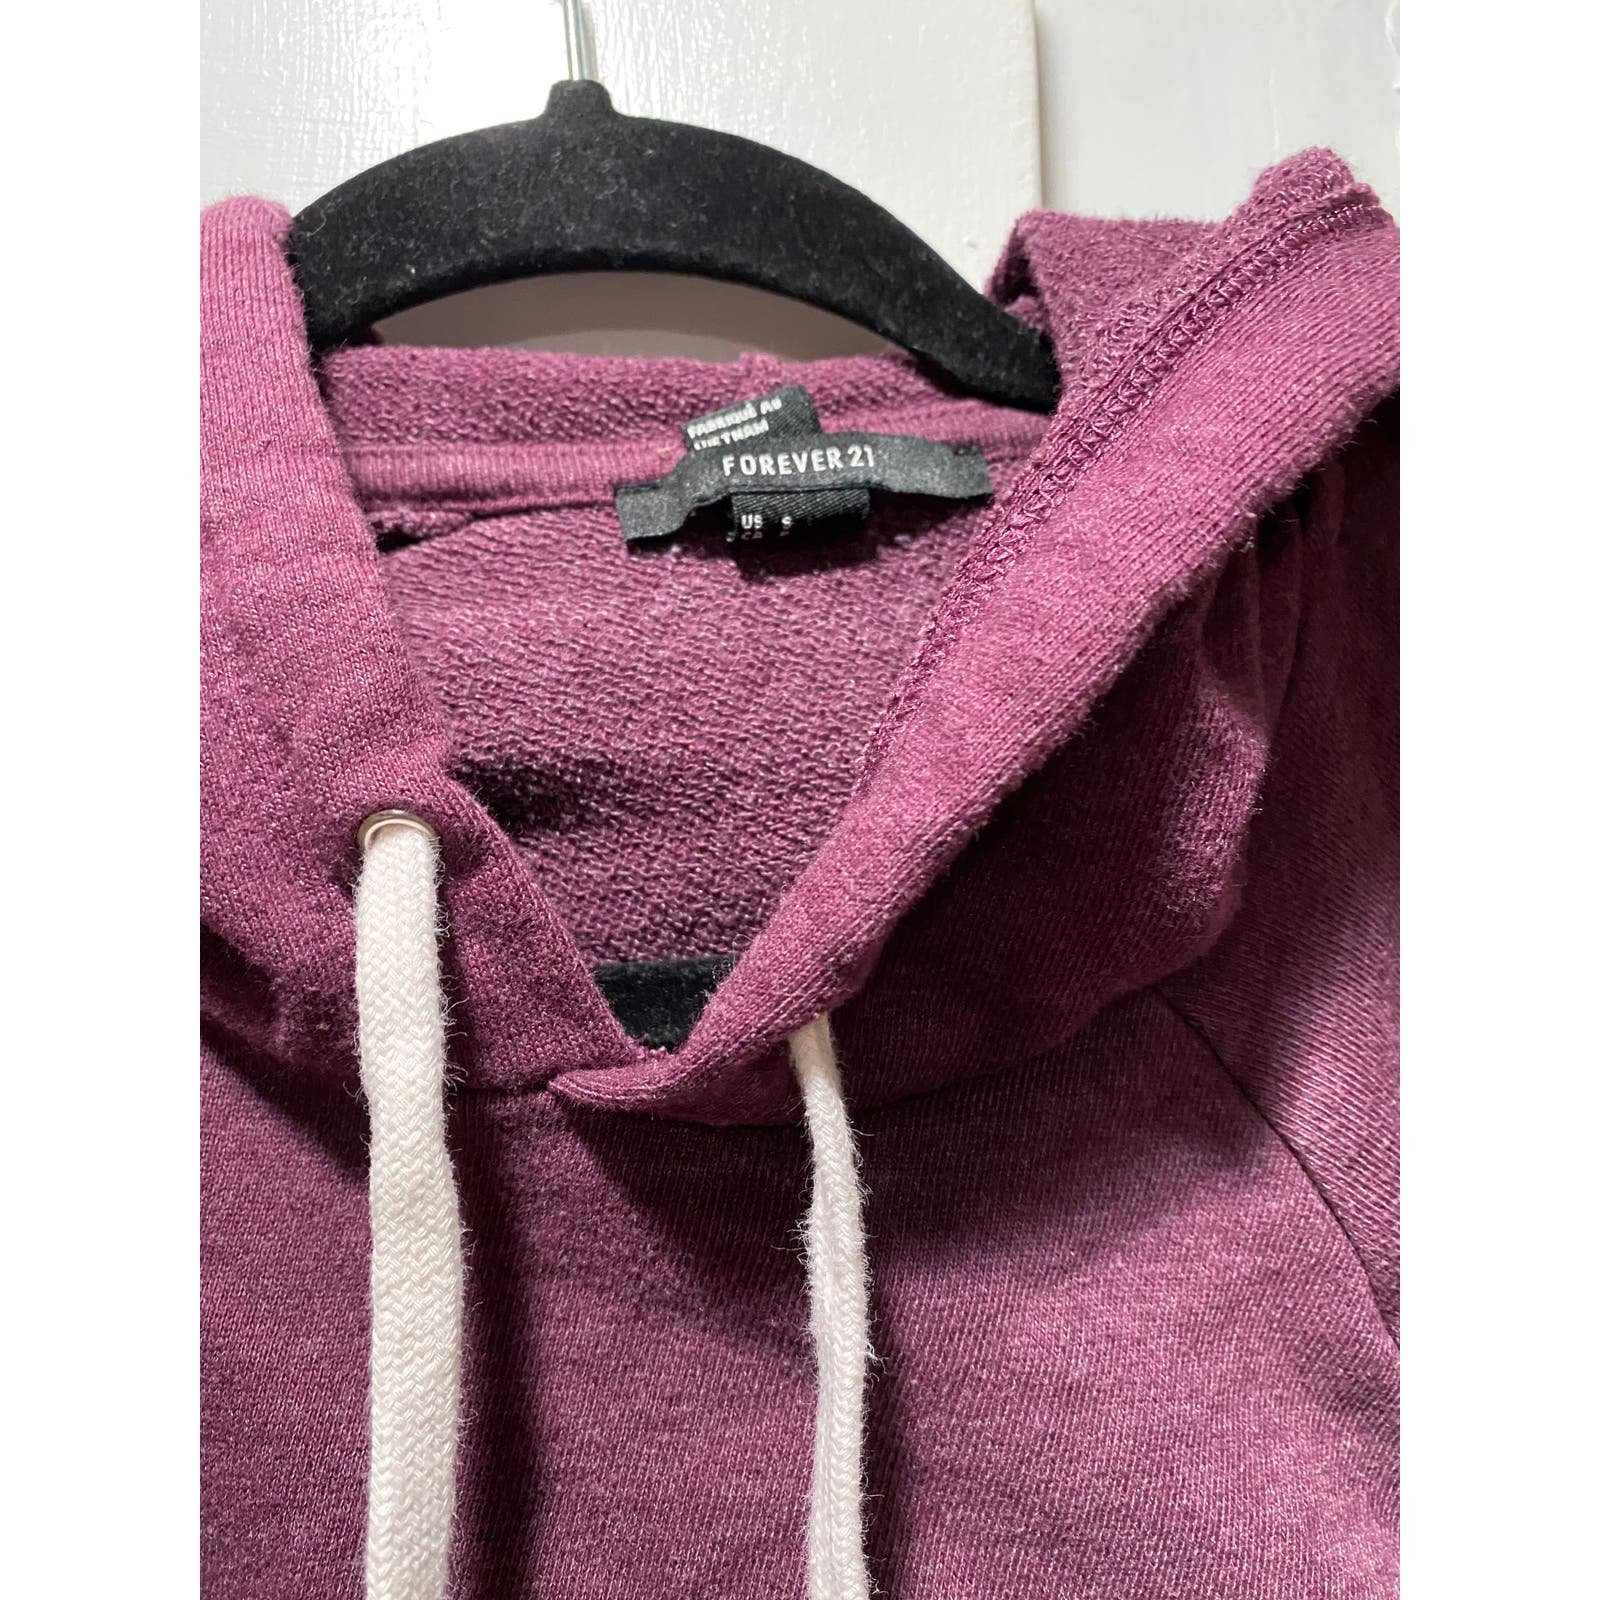 Wholesale price Forever 21 Hoodie Womens Small Maroon Long Sleeve Pullover Kangaroo Pocket khpHZjHr6 Online Shop